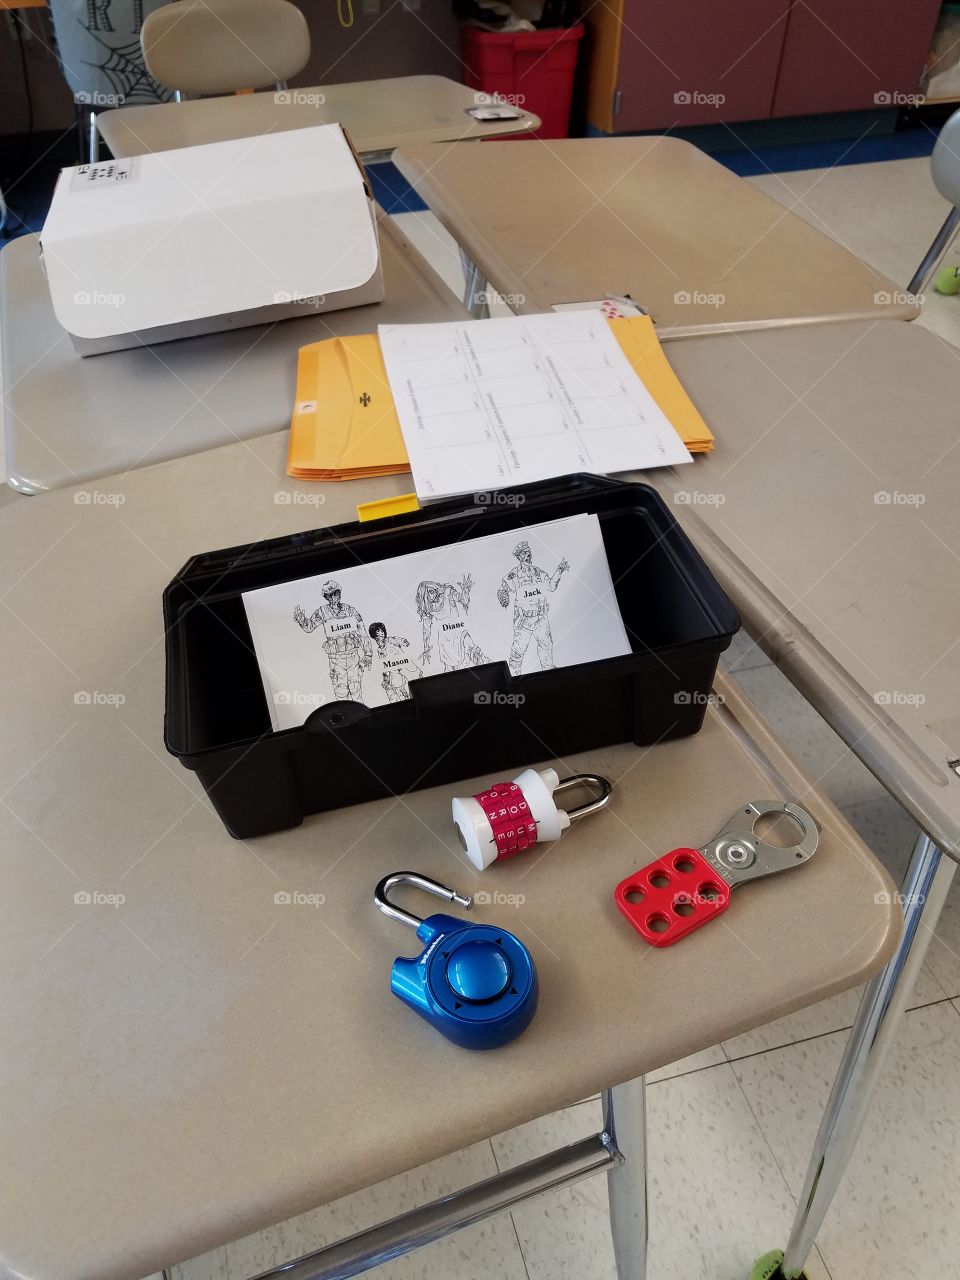 Lock box set up for classroom breakout/escape room